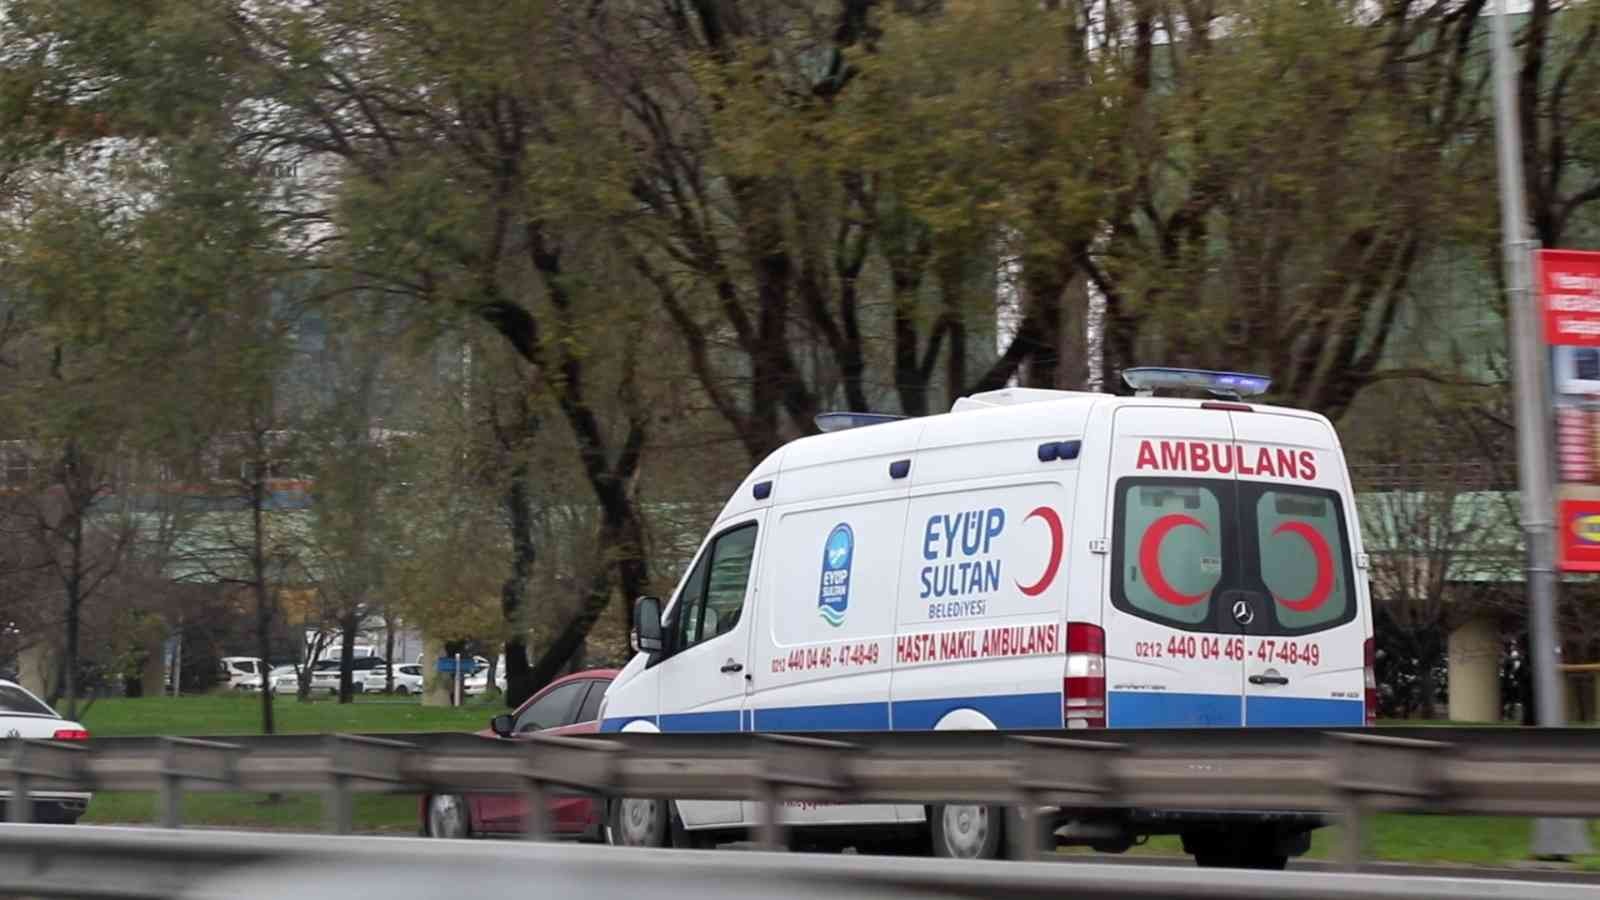 Eyüpsultan’da hasta nakil ambulans hizmeti #istanbul